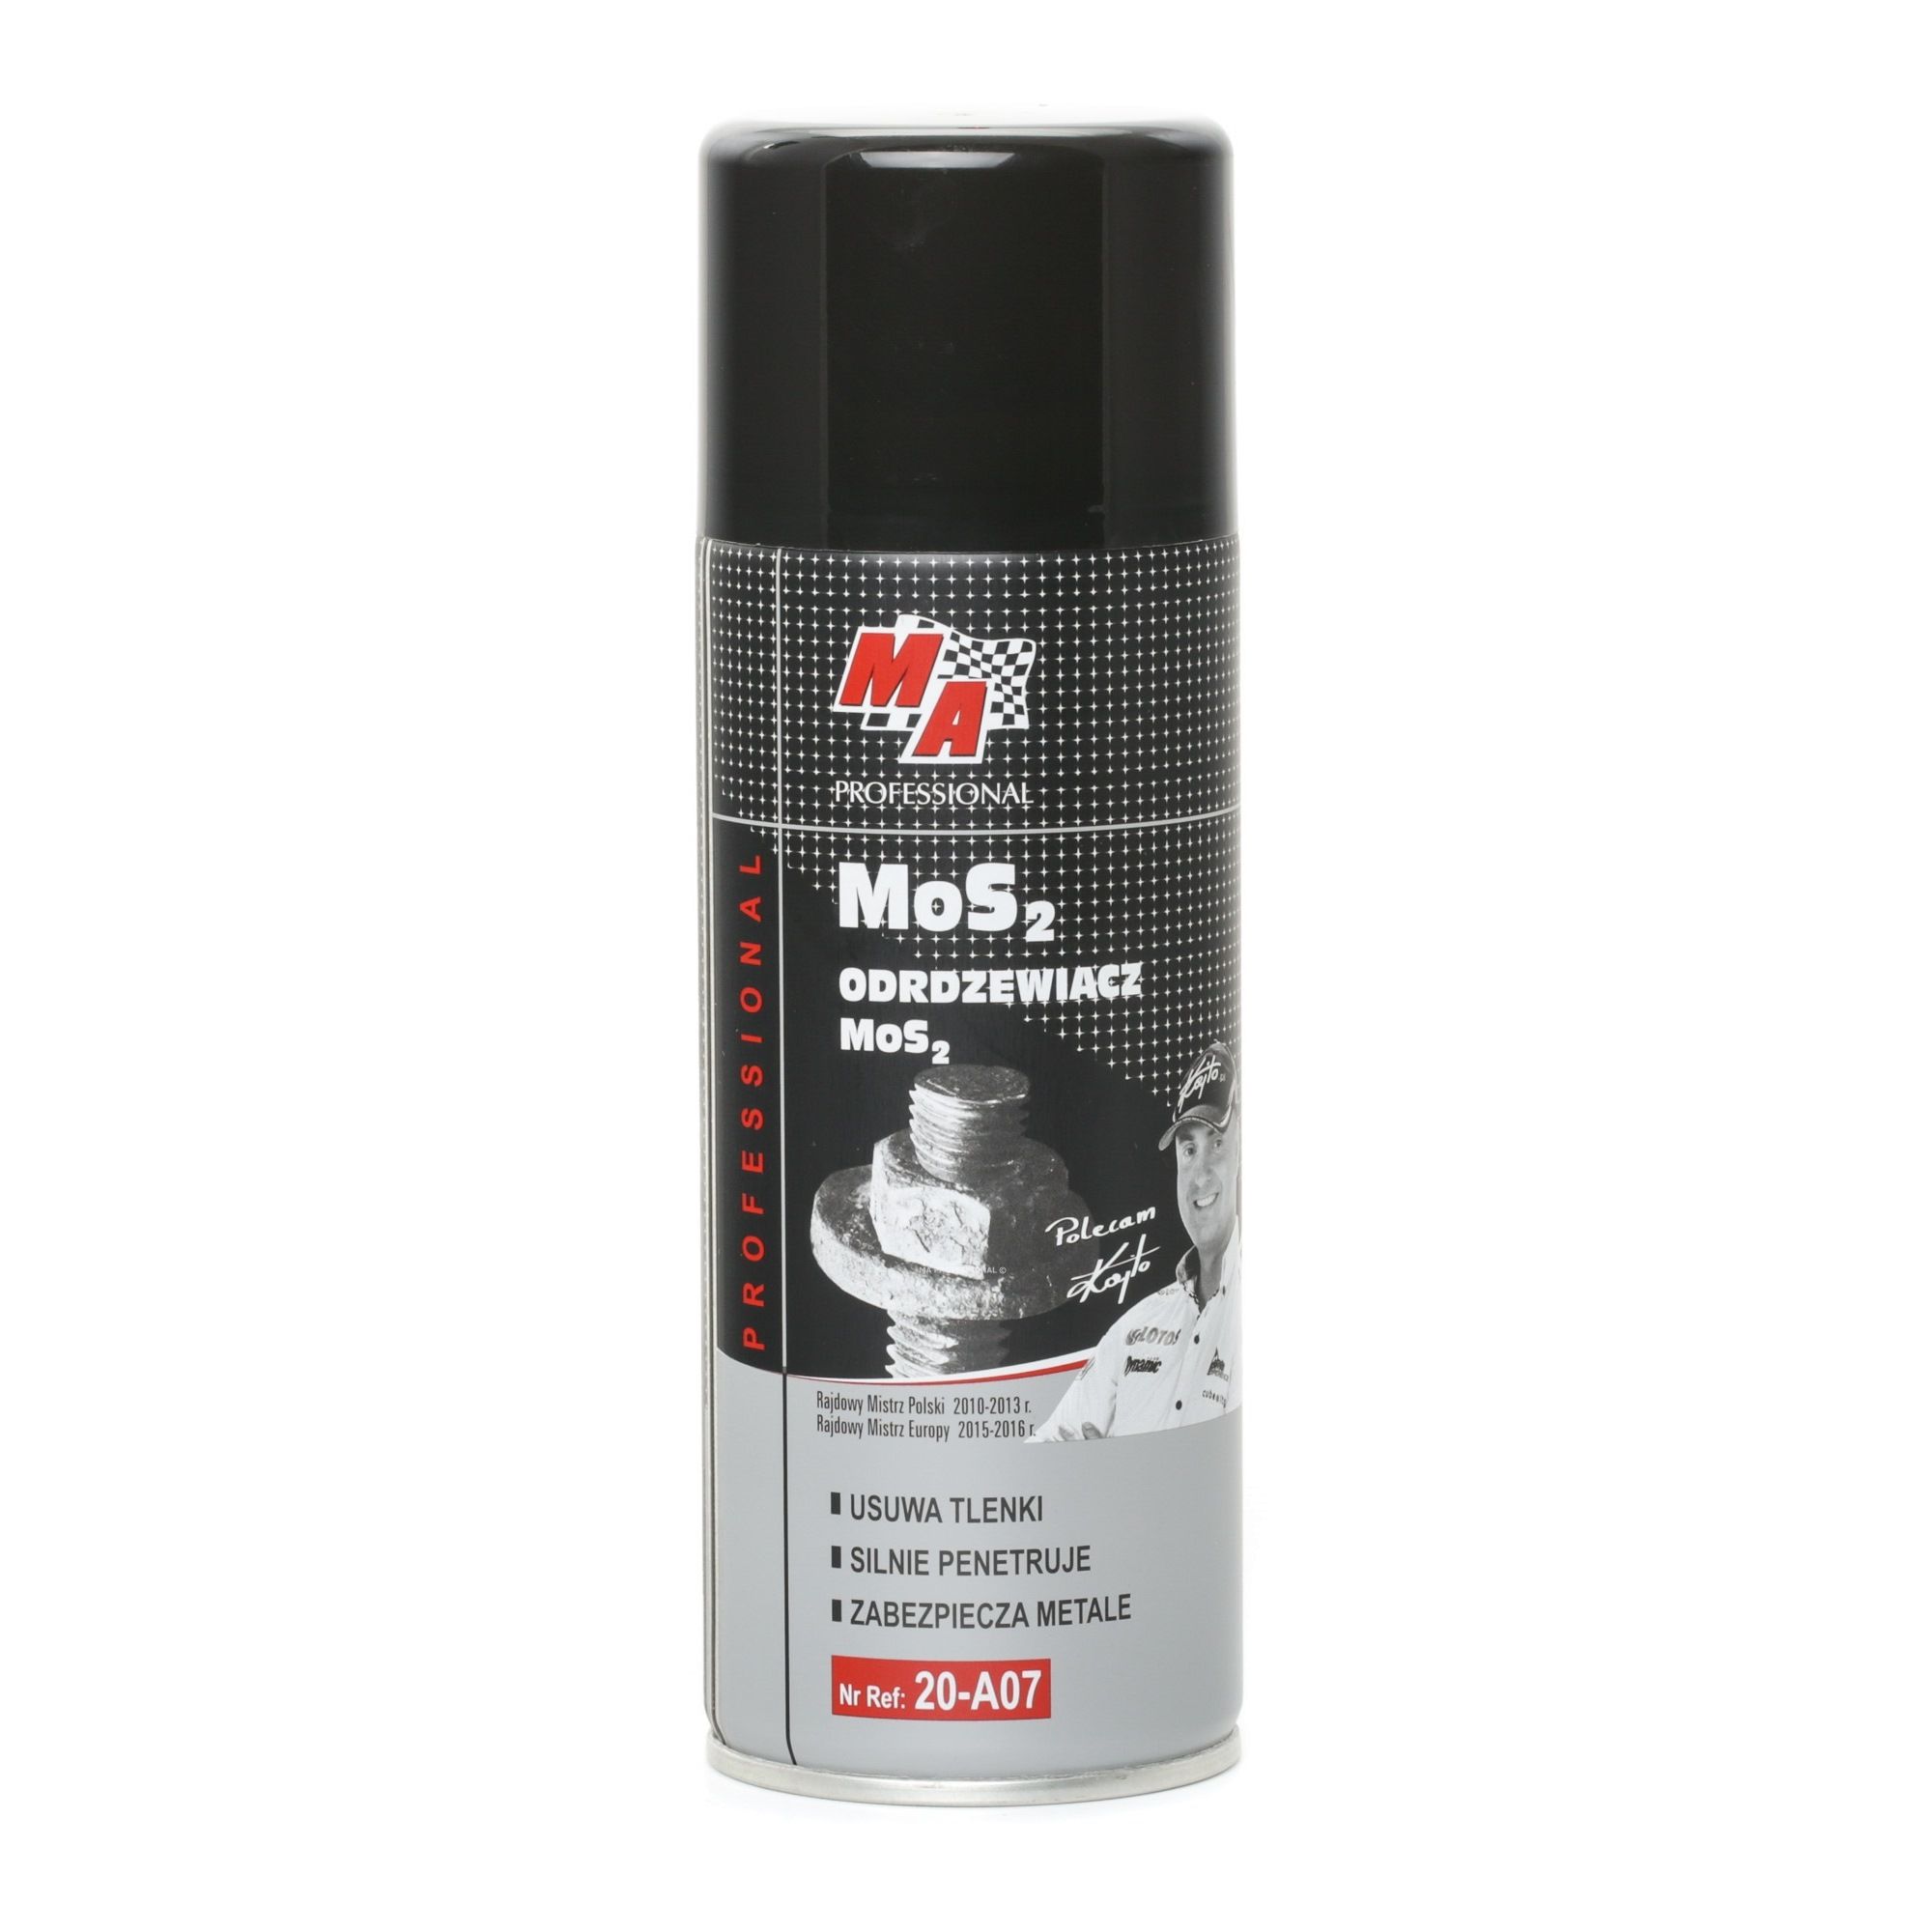 MA PROFESSIONAL 20A07 Technical sprays